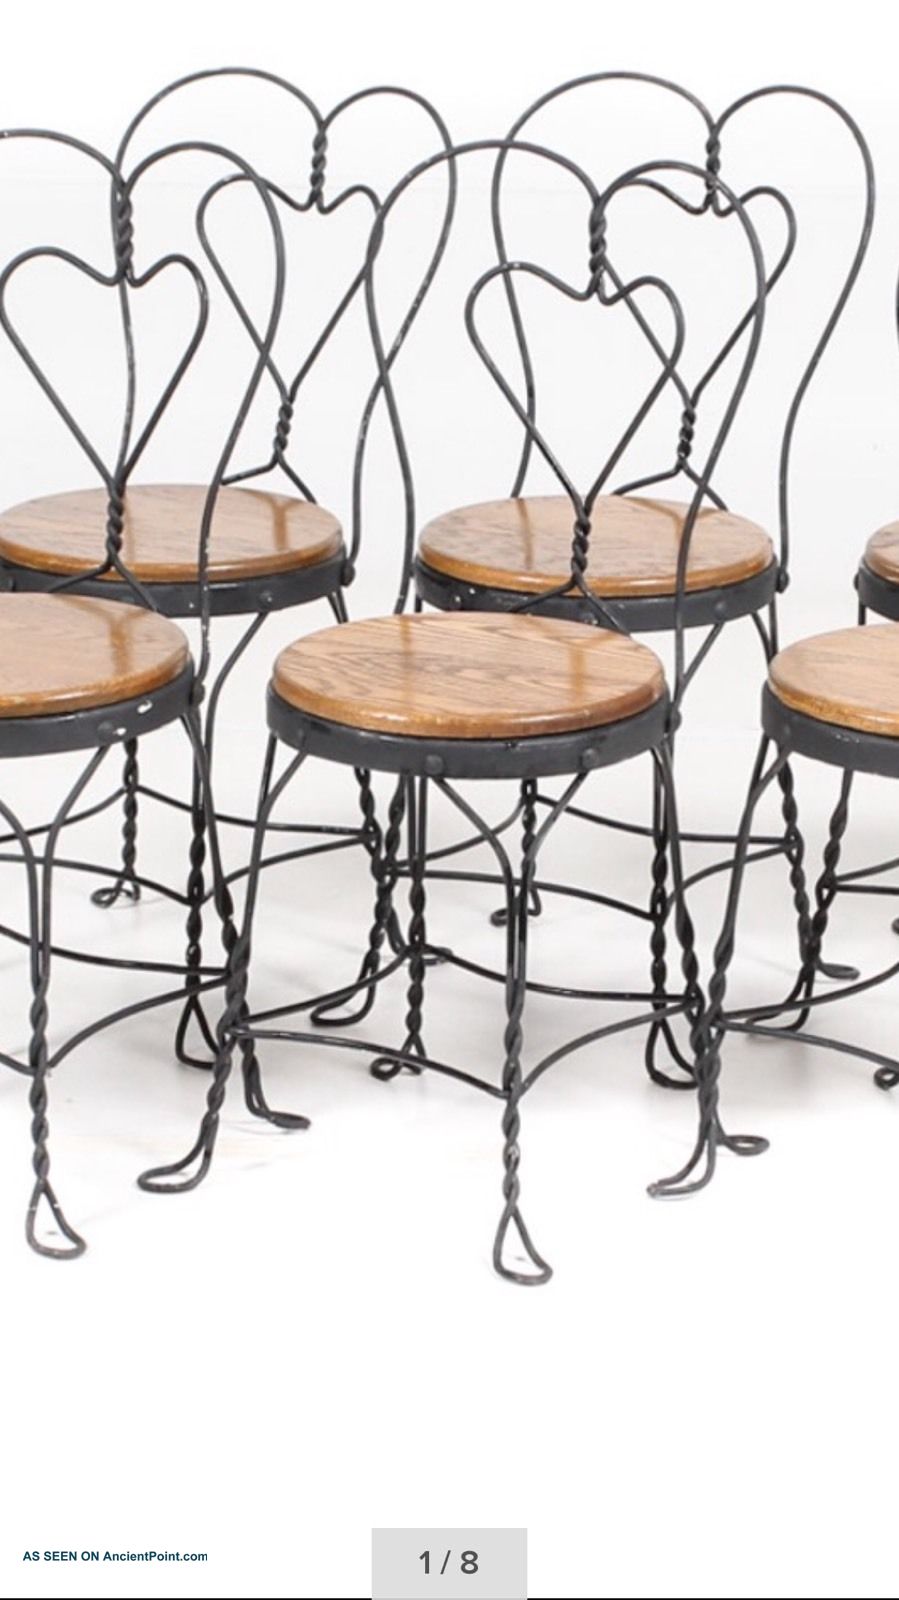 Antique Ice Cream Parlor Chairs - Astrogeopysics